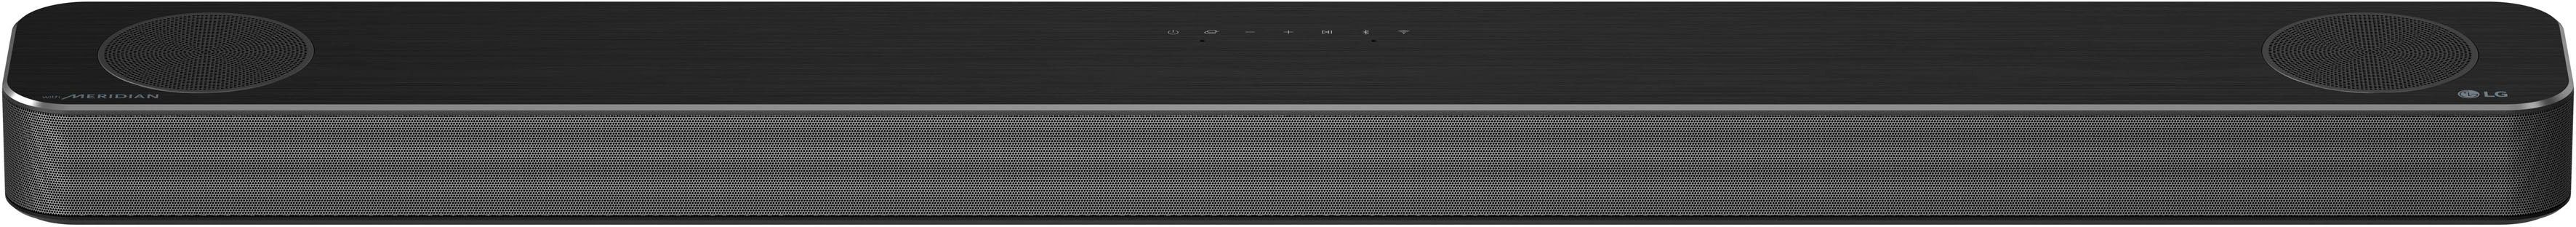 LG SPD75YA 400 (WiFi), W) 3.1.2 Soundbar (Bluetooth, WLAN